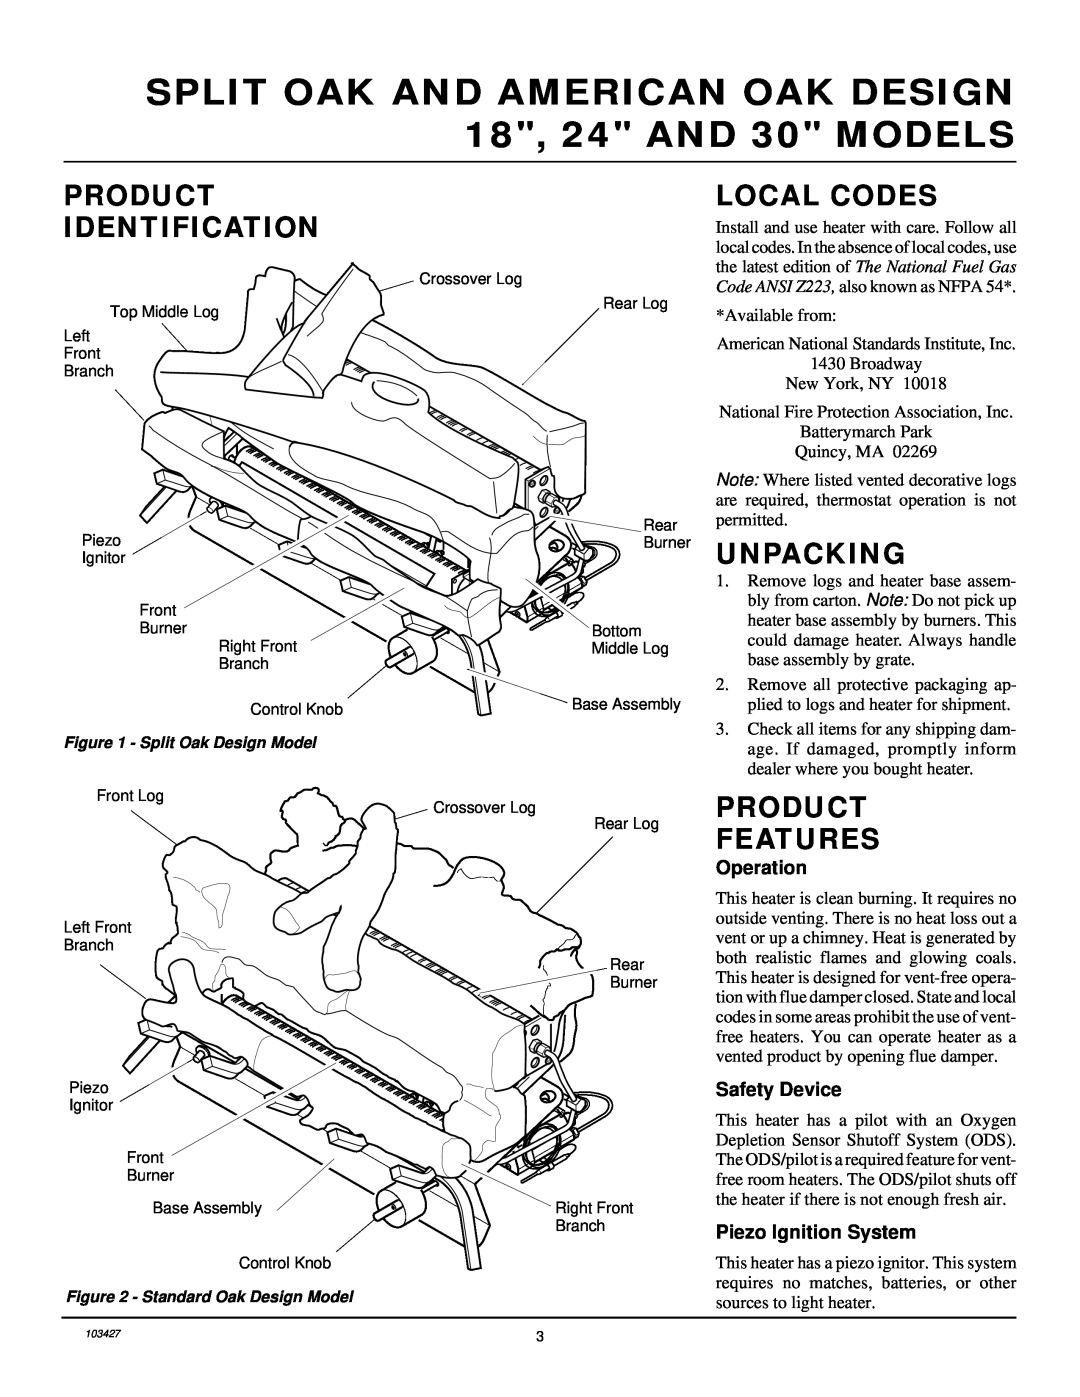 Desa Unvented Propane Gas Log Heater Model Split Oak and American Oak Design Product Identification, Local Codes 